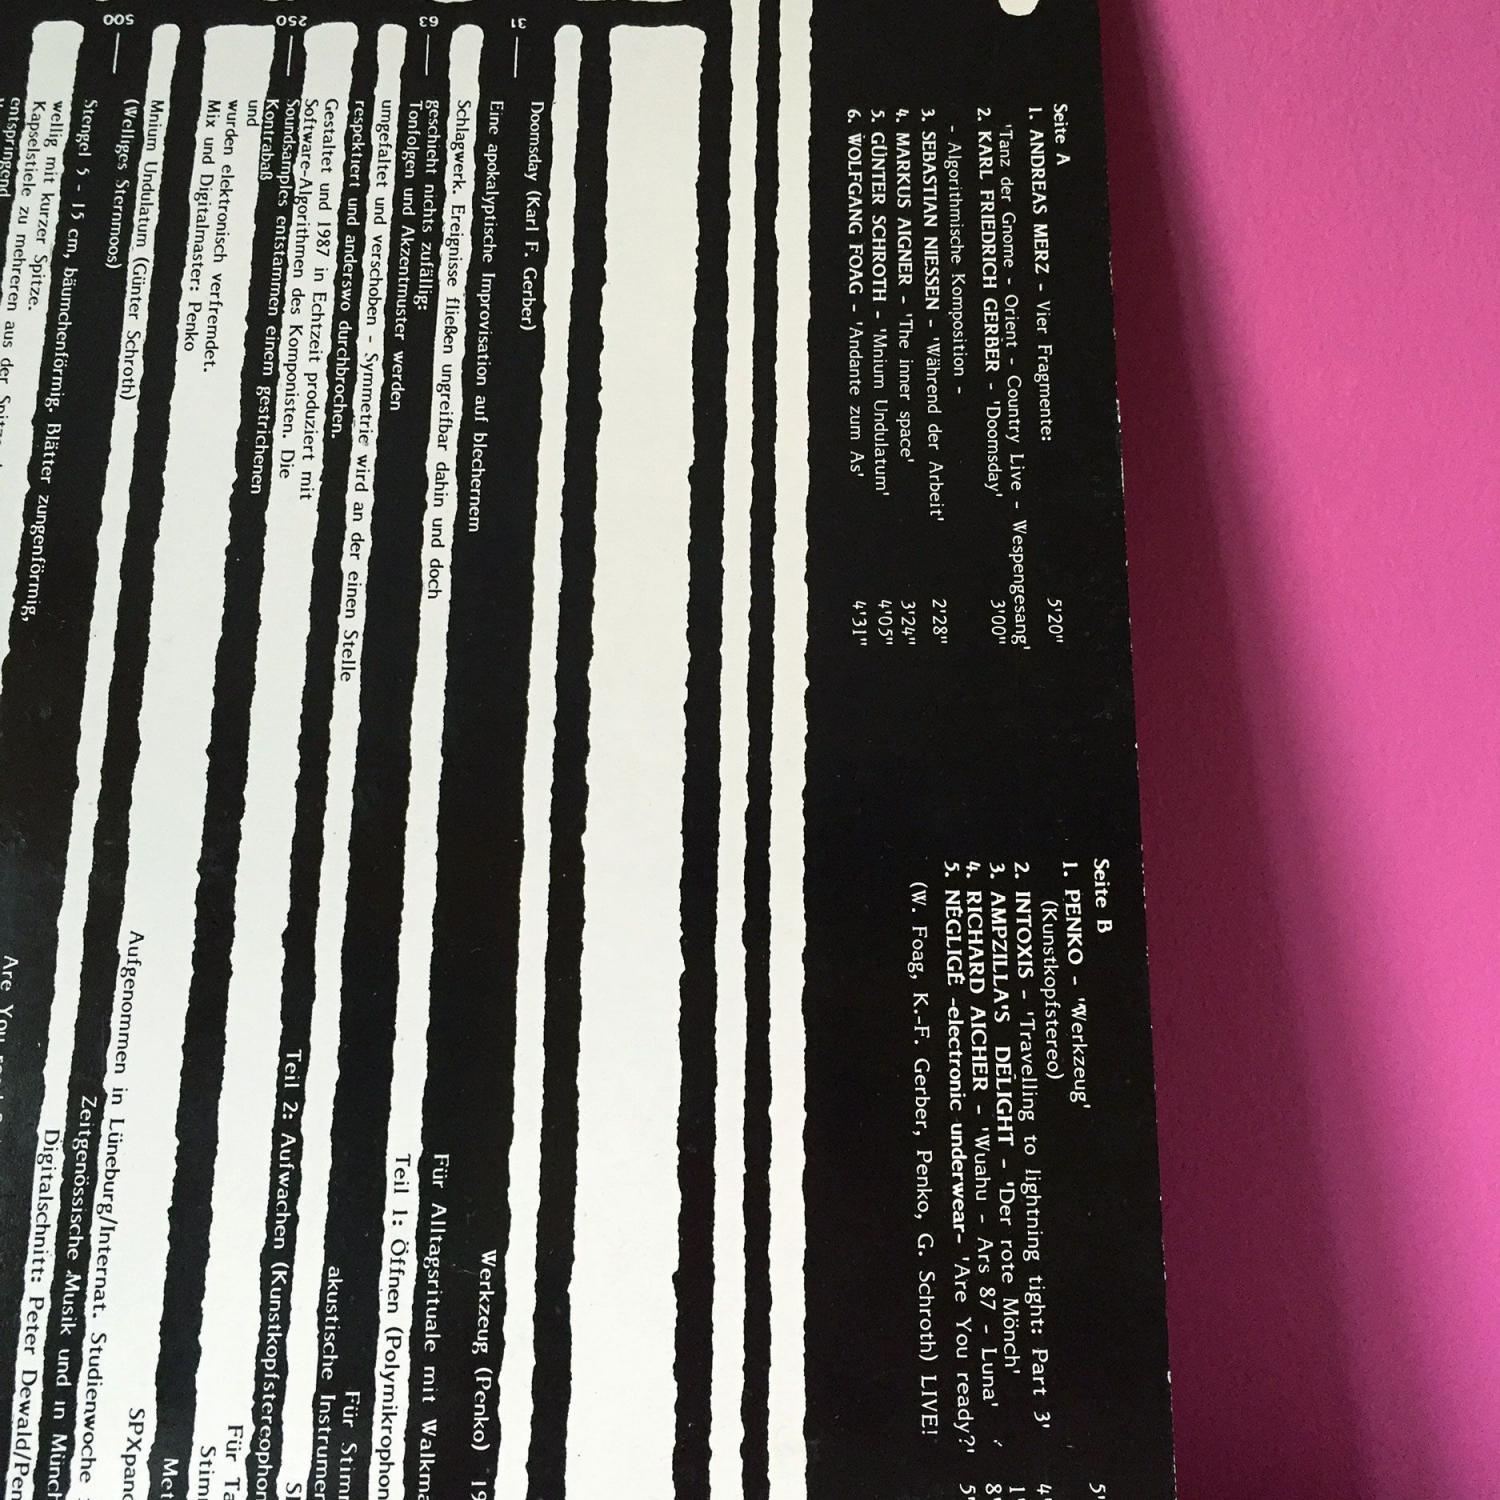 11mal elektronische Musik aus München – LP-Cover back (detail)